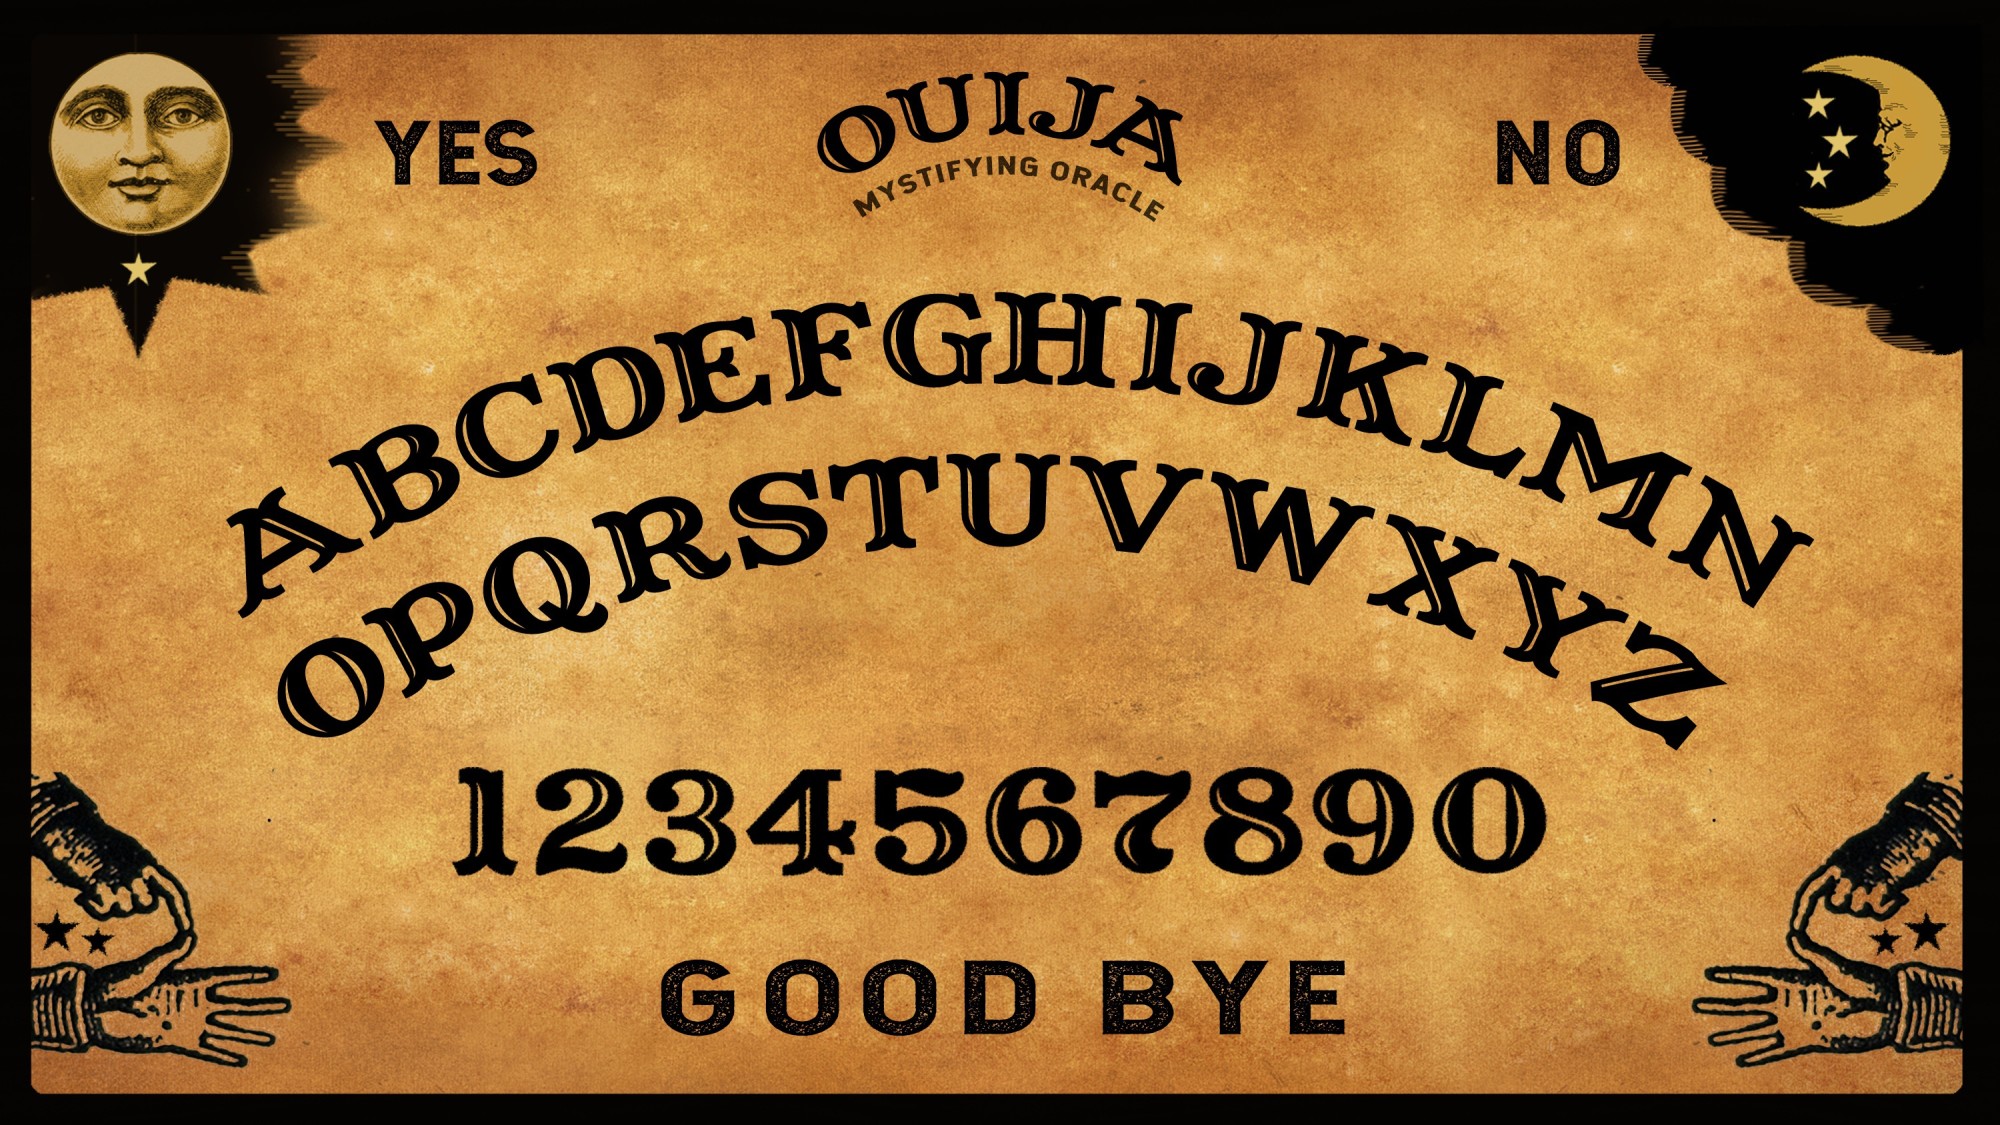 Are Ouija Boards Legitimate or Just Games?